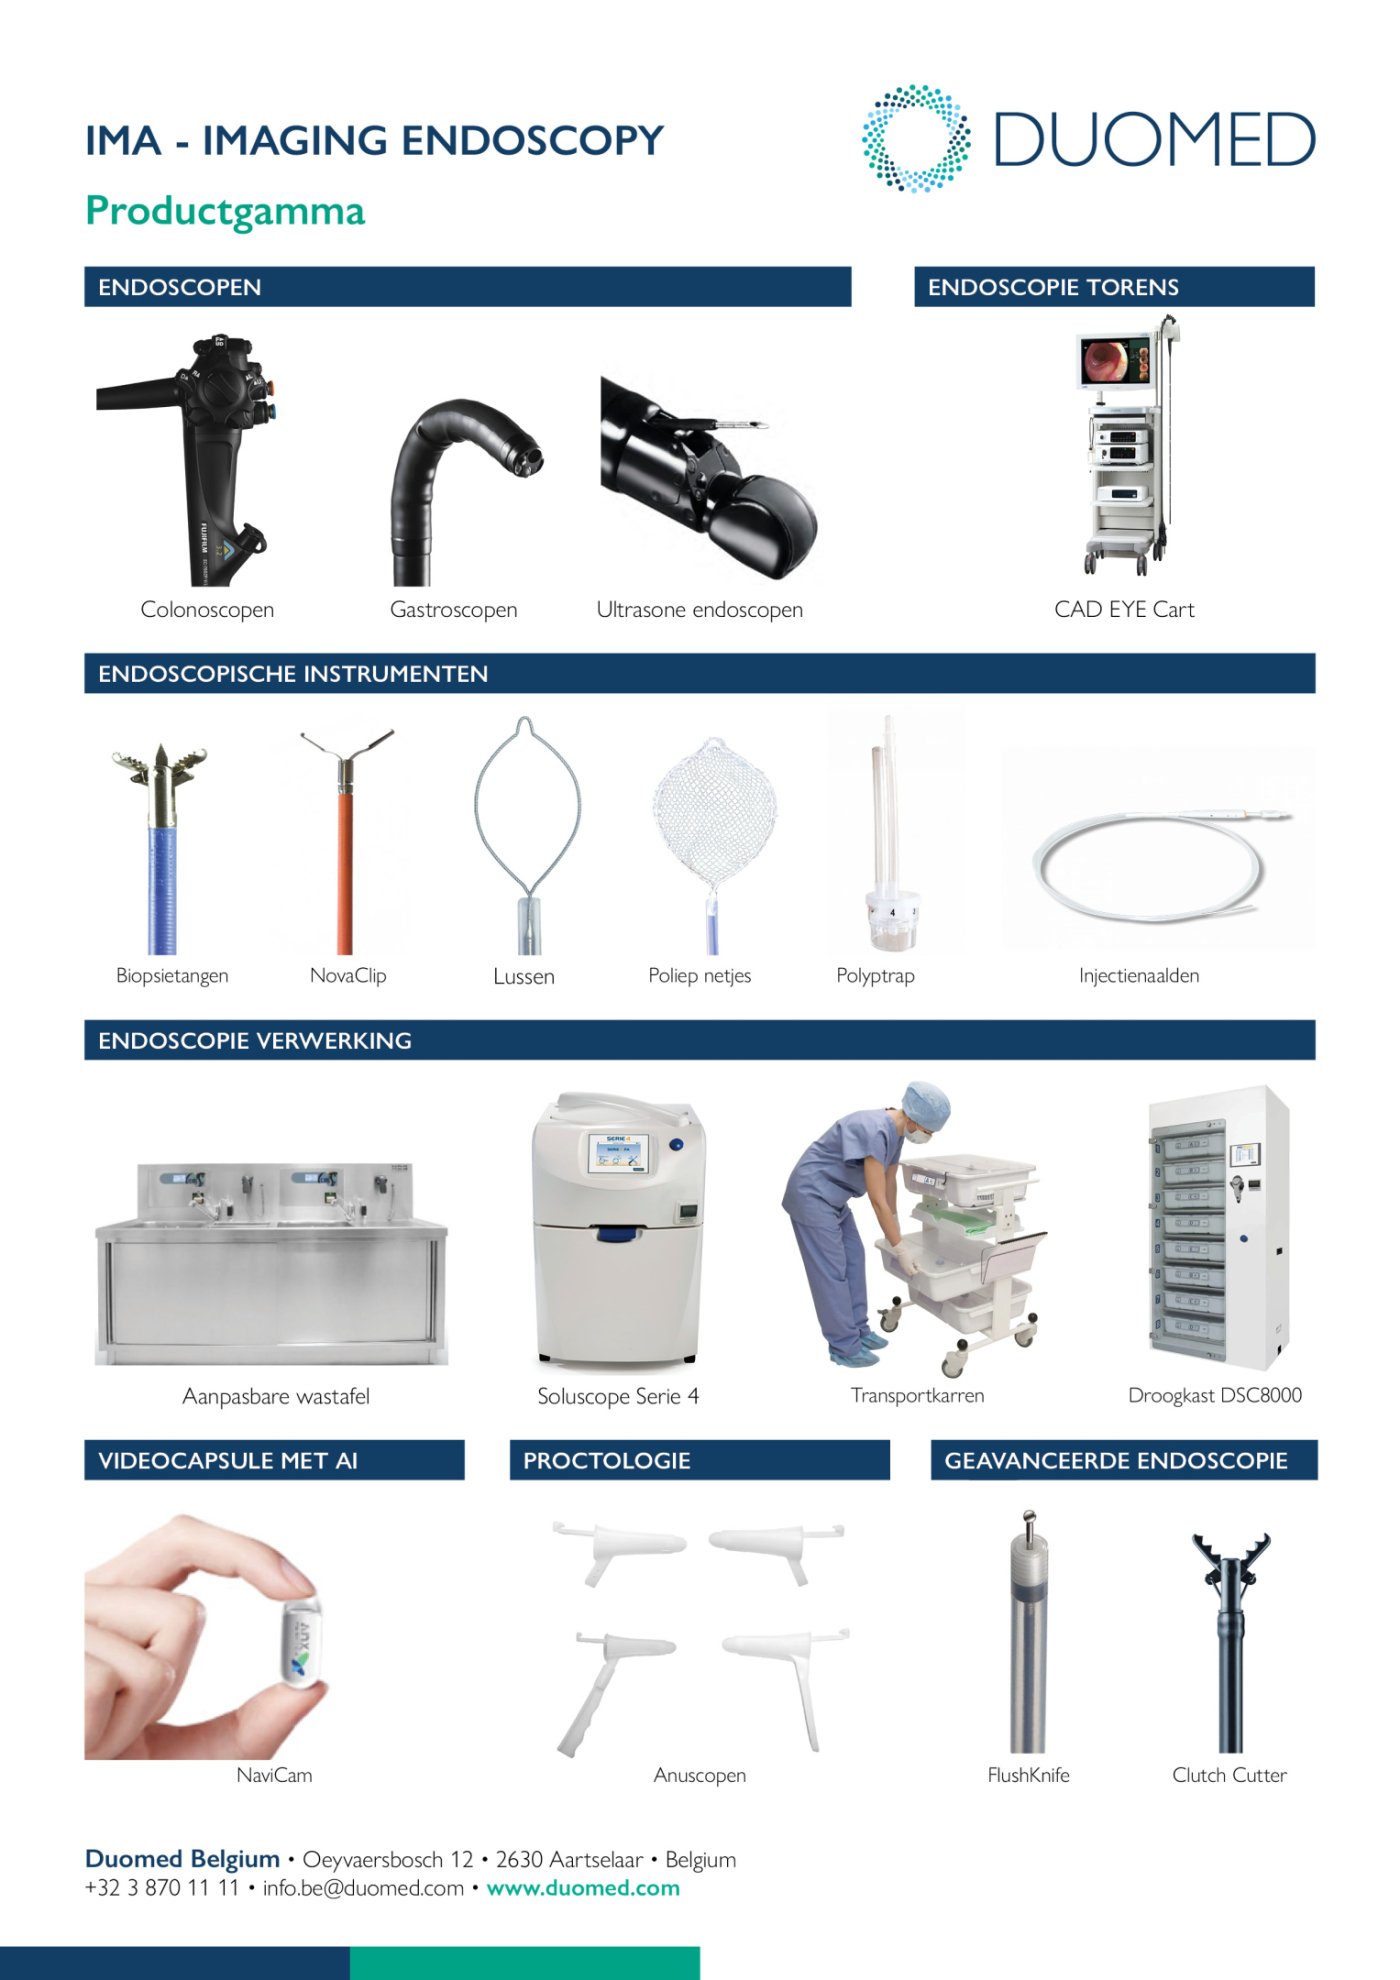  IMA - Imaging Endoscopy - Portfolio